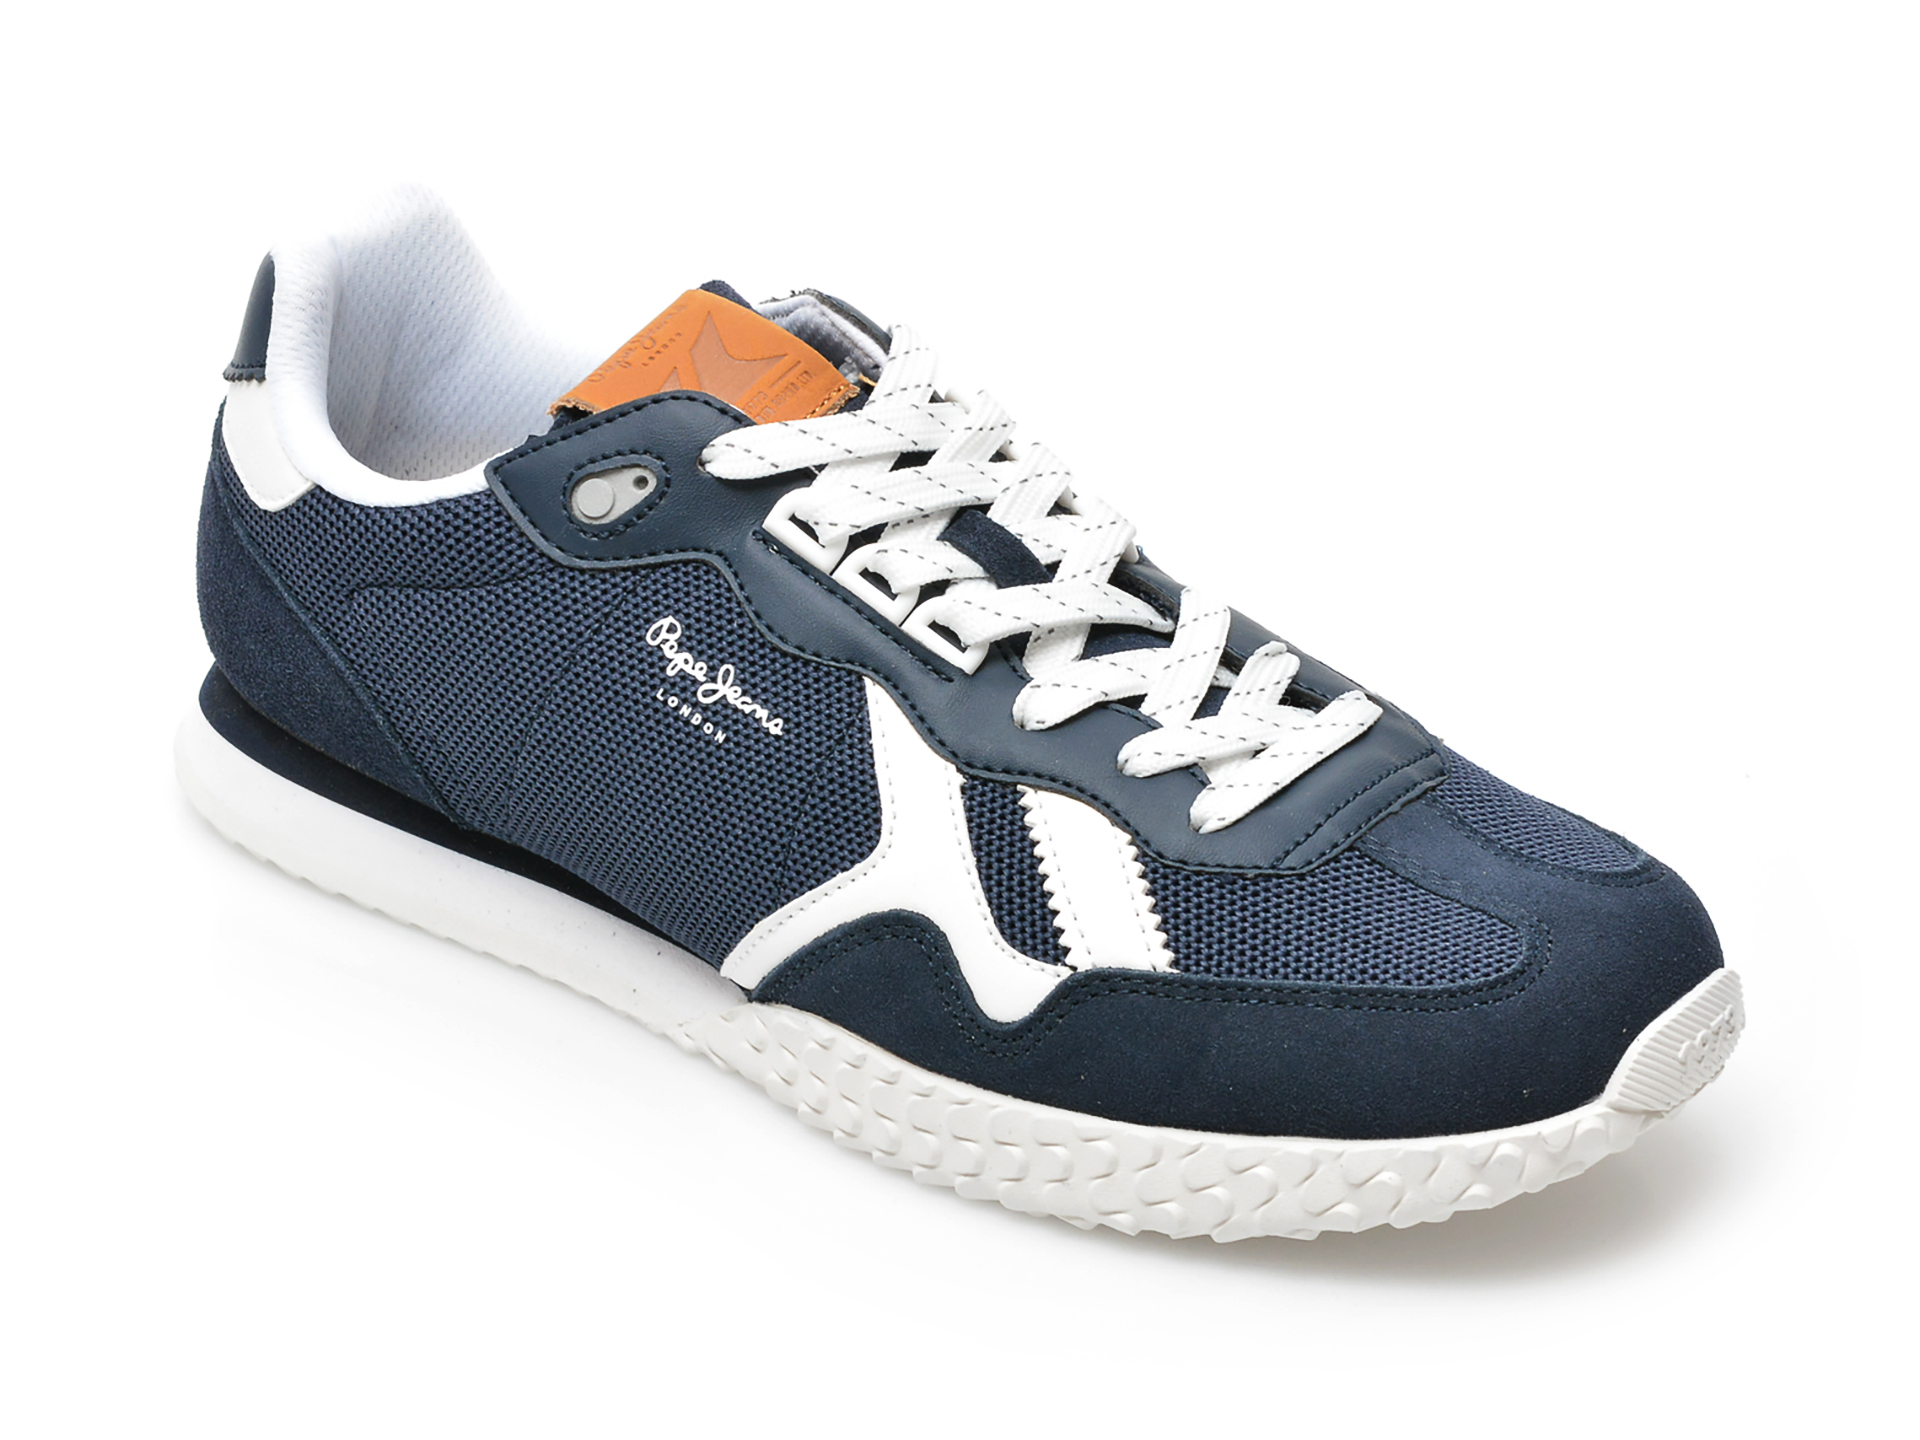 Pantofi PEPE JEANS bleumarin, MS30818, din material textil si piele naturala Pepe Jeans